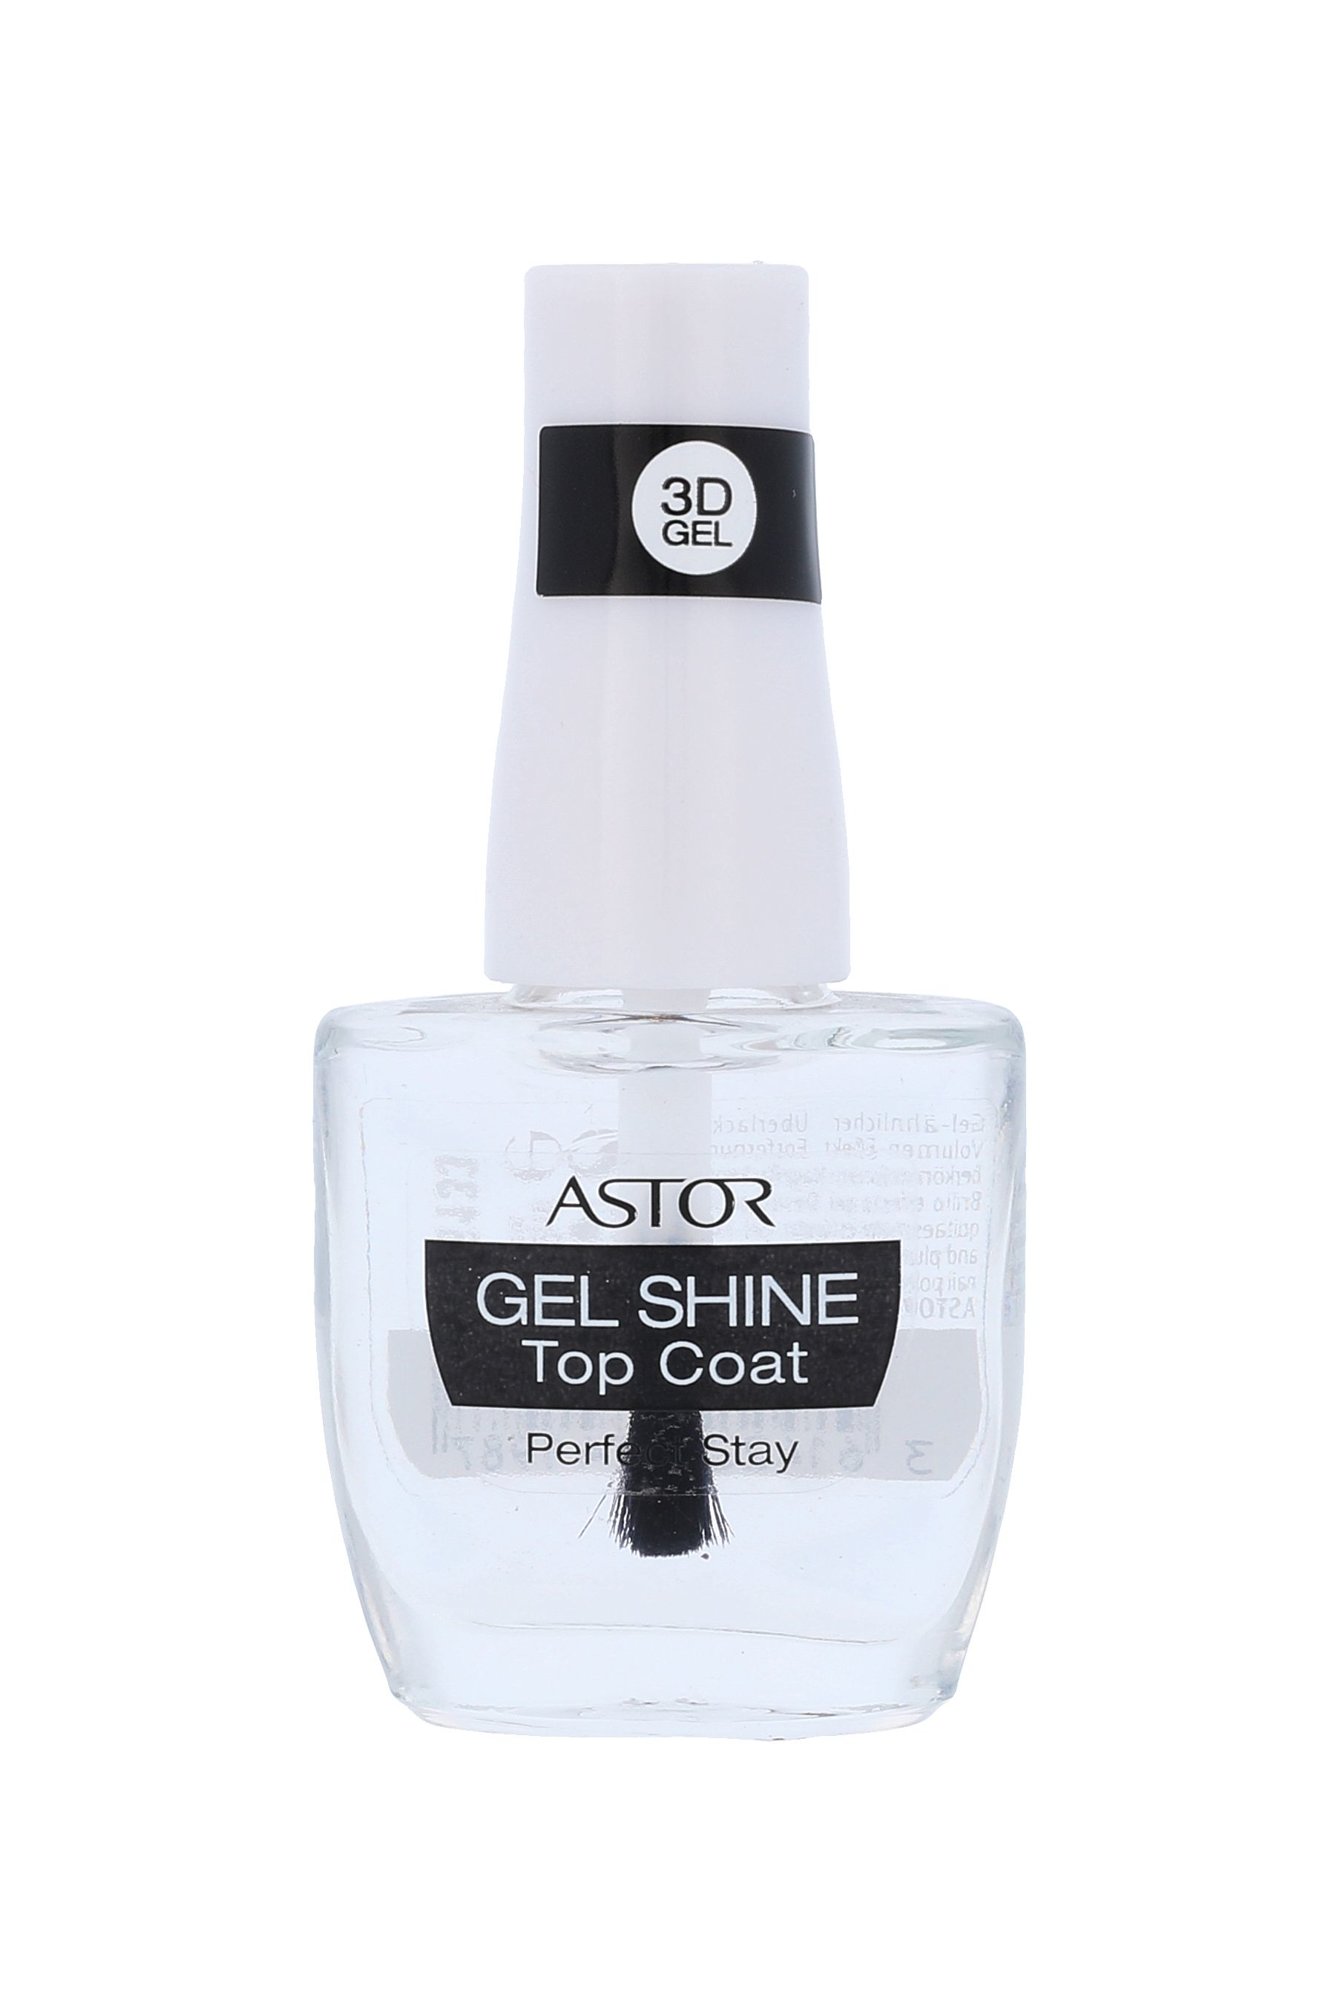 Astor Perfect Stay 3D Gel Shine Top Coat